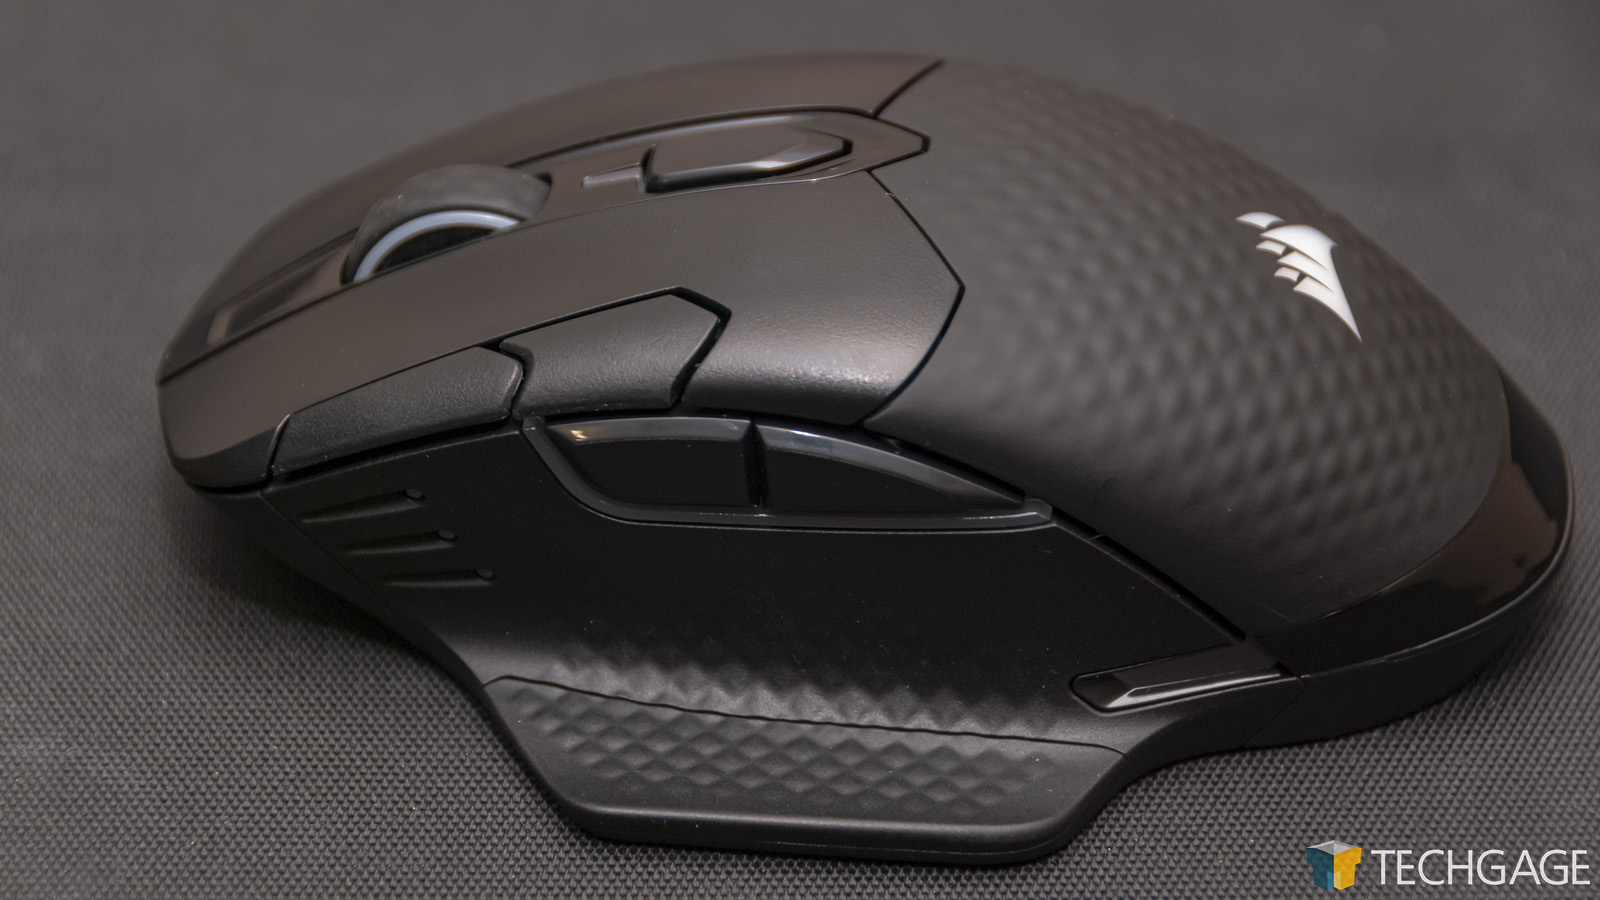 Corsair Dark Core Pro Gaming Mouse Review – Techgage